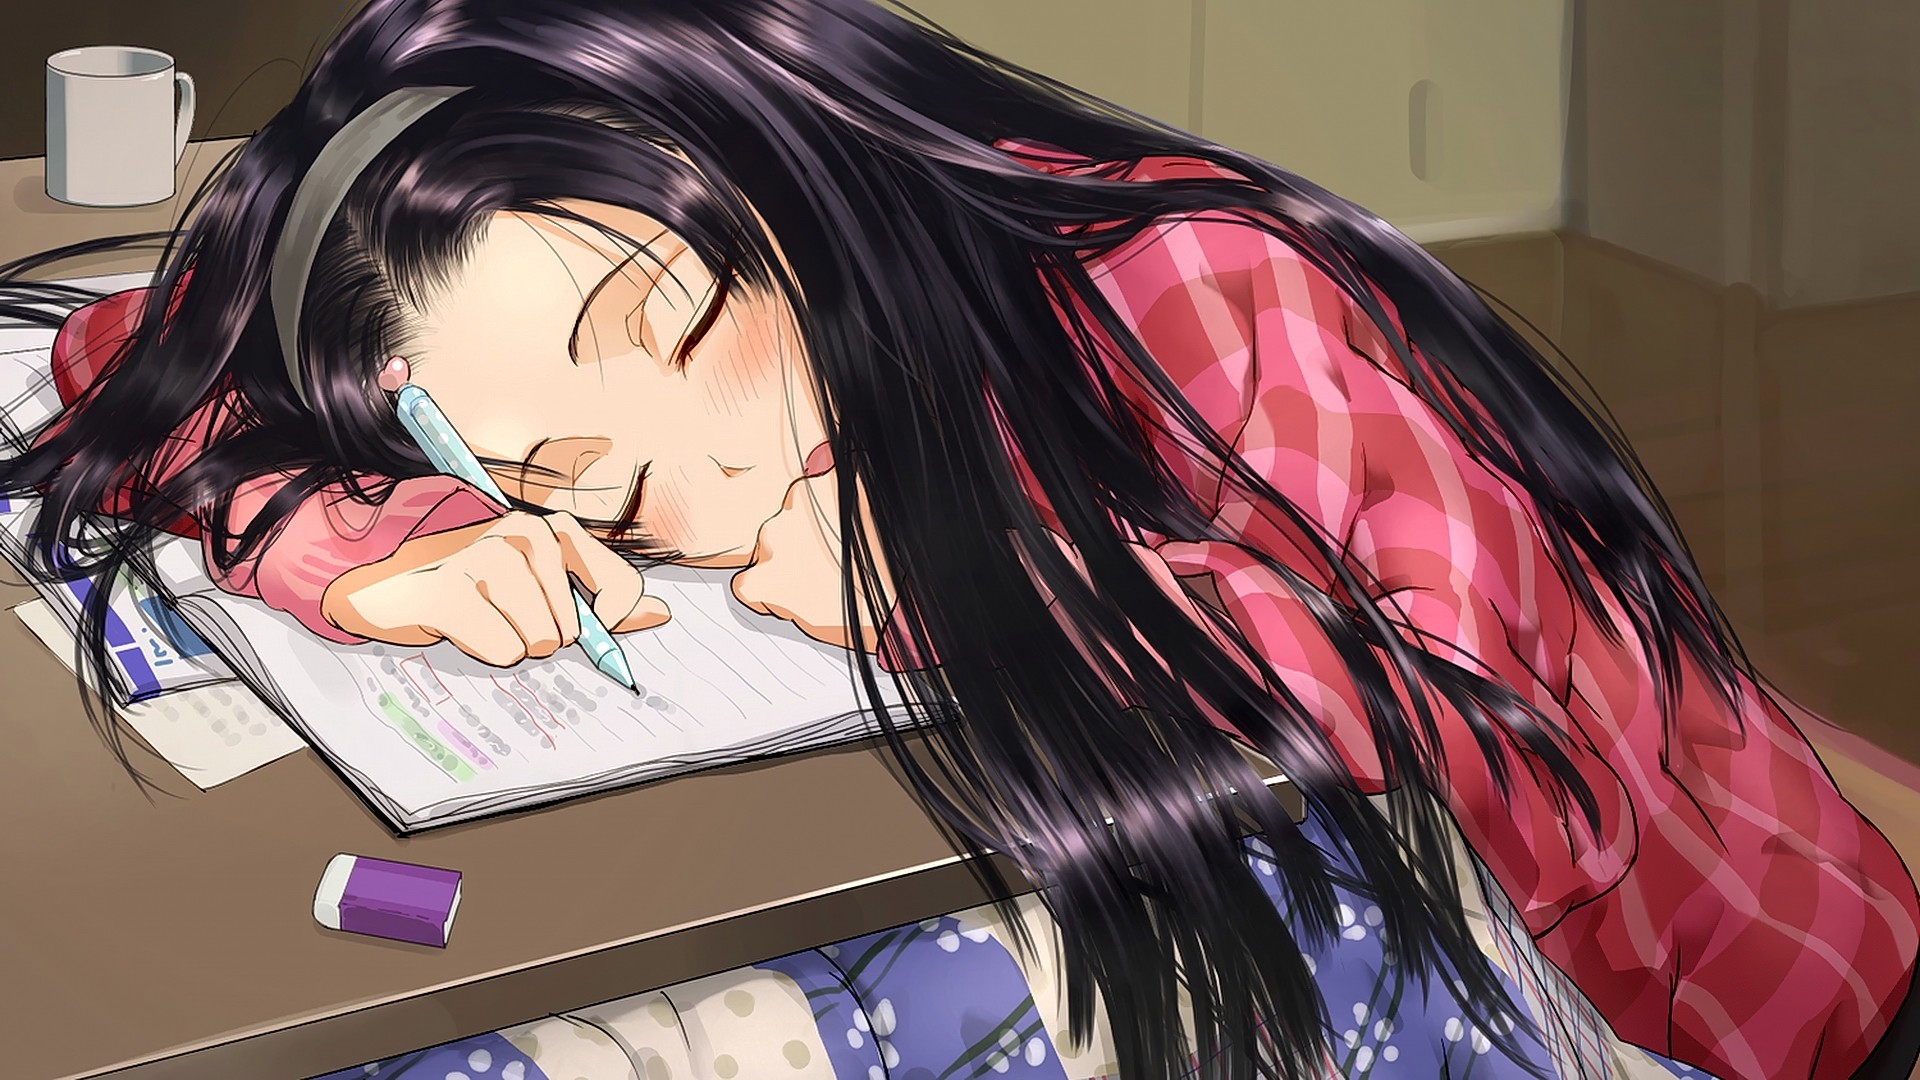 Anime 1920x1080 anime anime girls long hair closed eyes sleeping dark hair pens black hair cup rubber